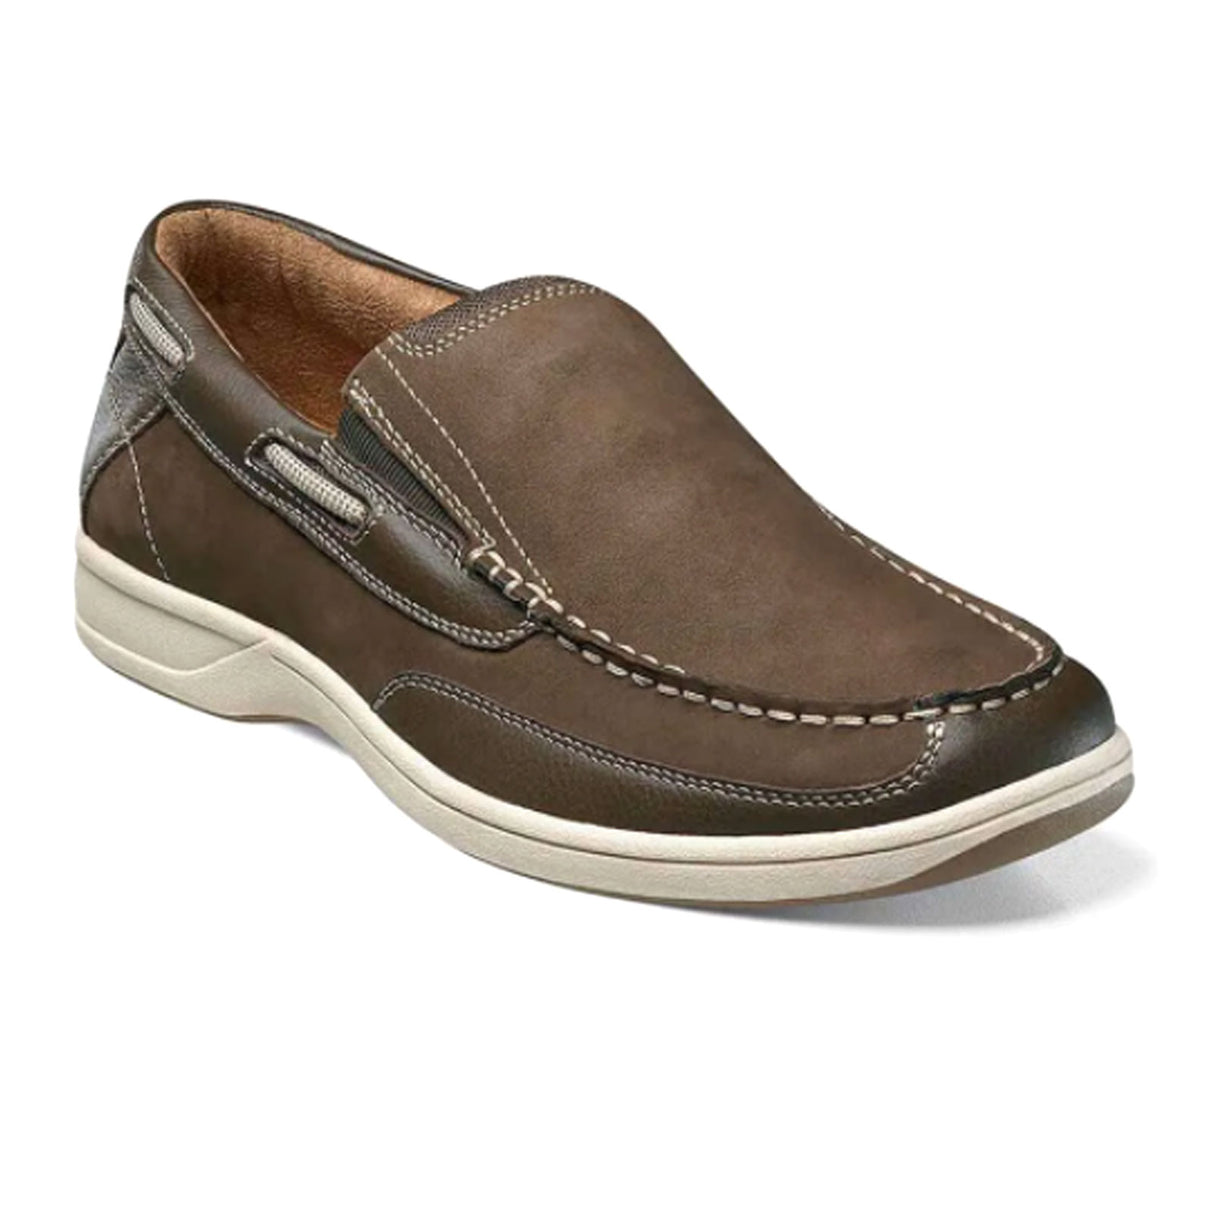 Florsheim Marina Slip On Boat Shoe (Men) - Brown Dress-Casual - Boat Shoes - The Heel Shoe Fitters